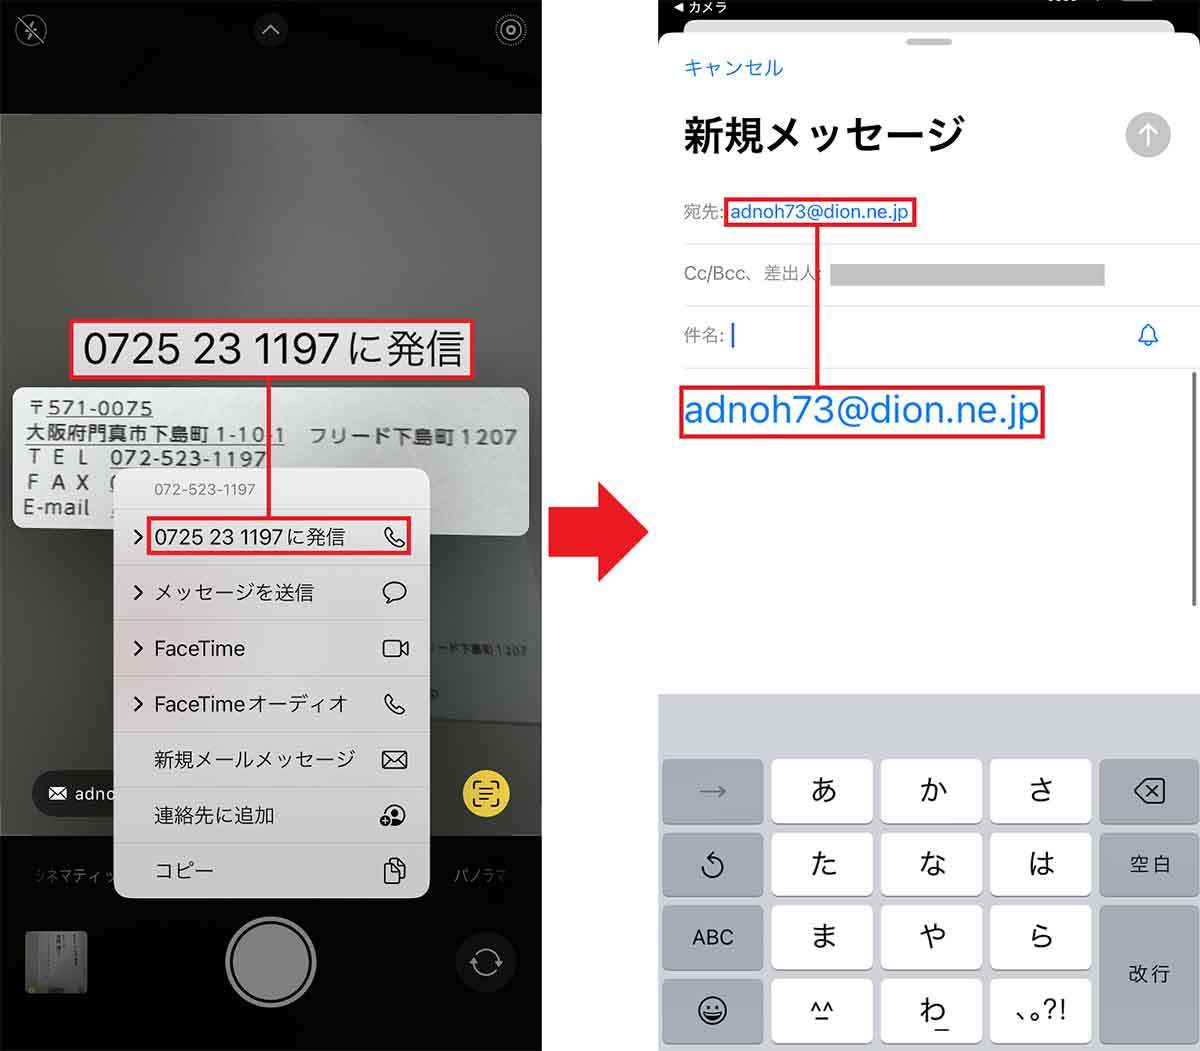 iPhoneカメラの「テキスト認識表示」で印刷された文字をテキスト化する方法g